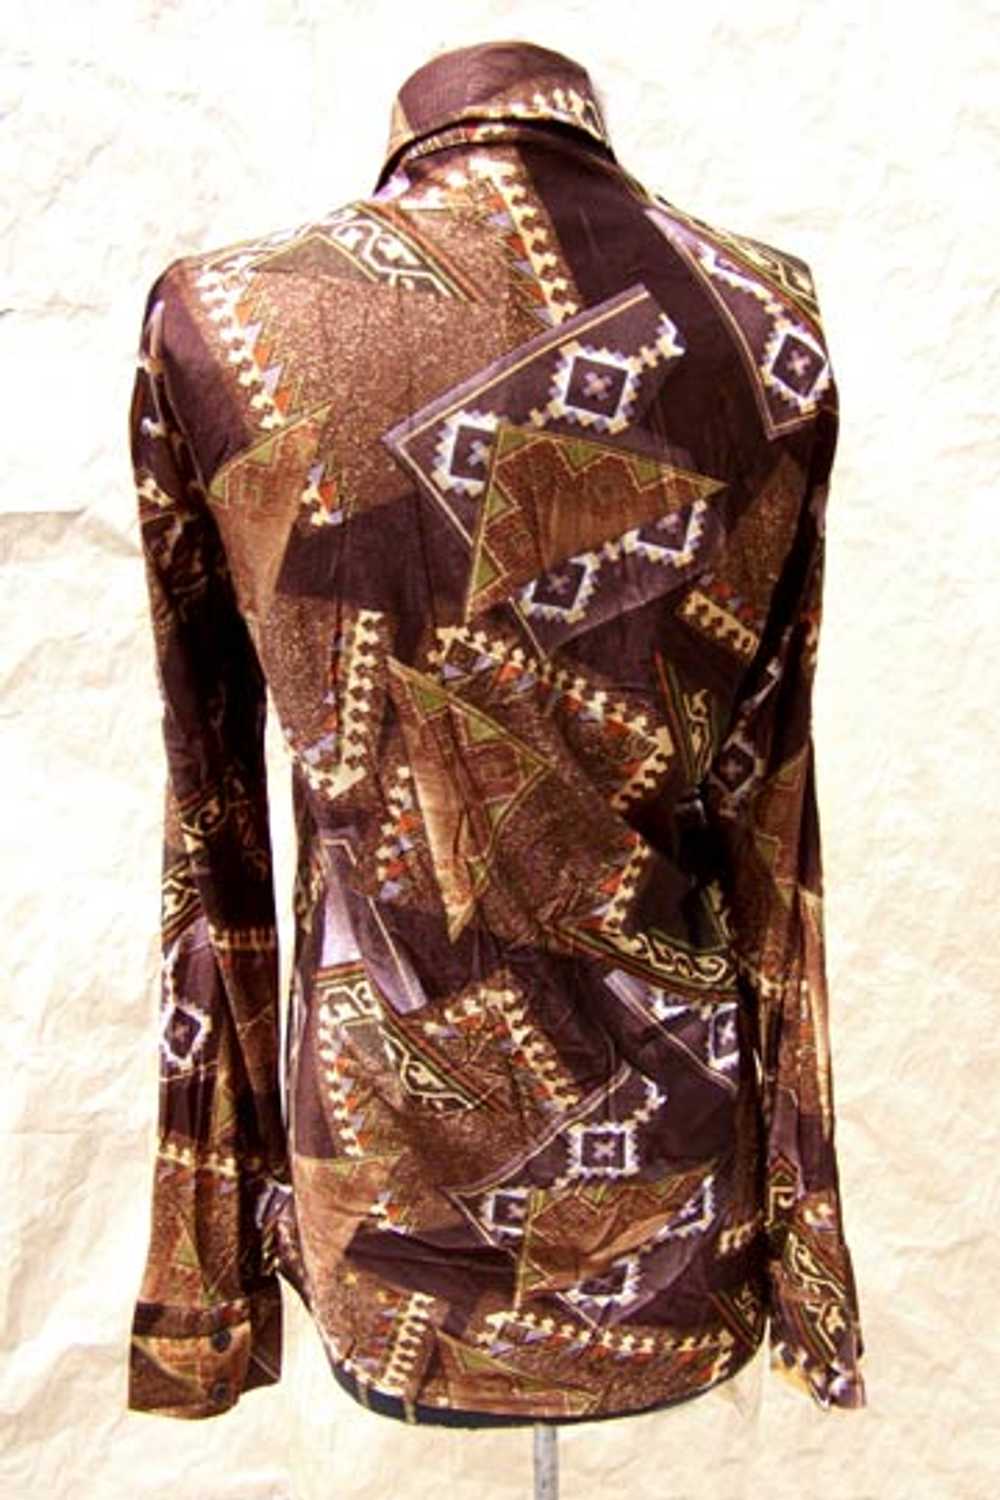 Indian-Blanket-print shirt - image 3